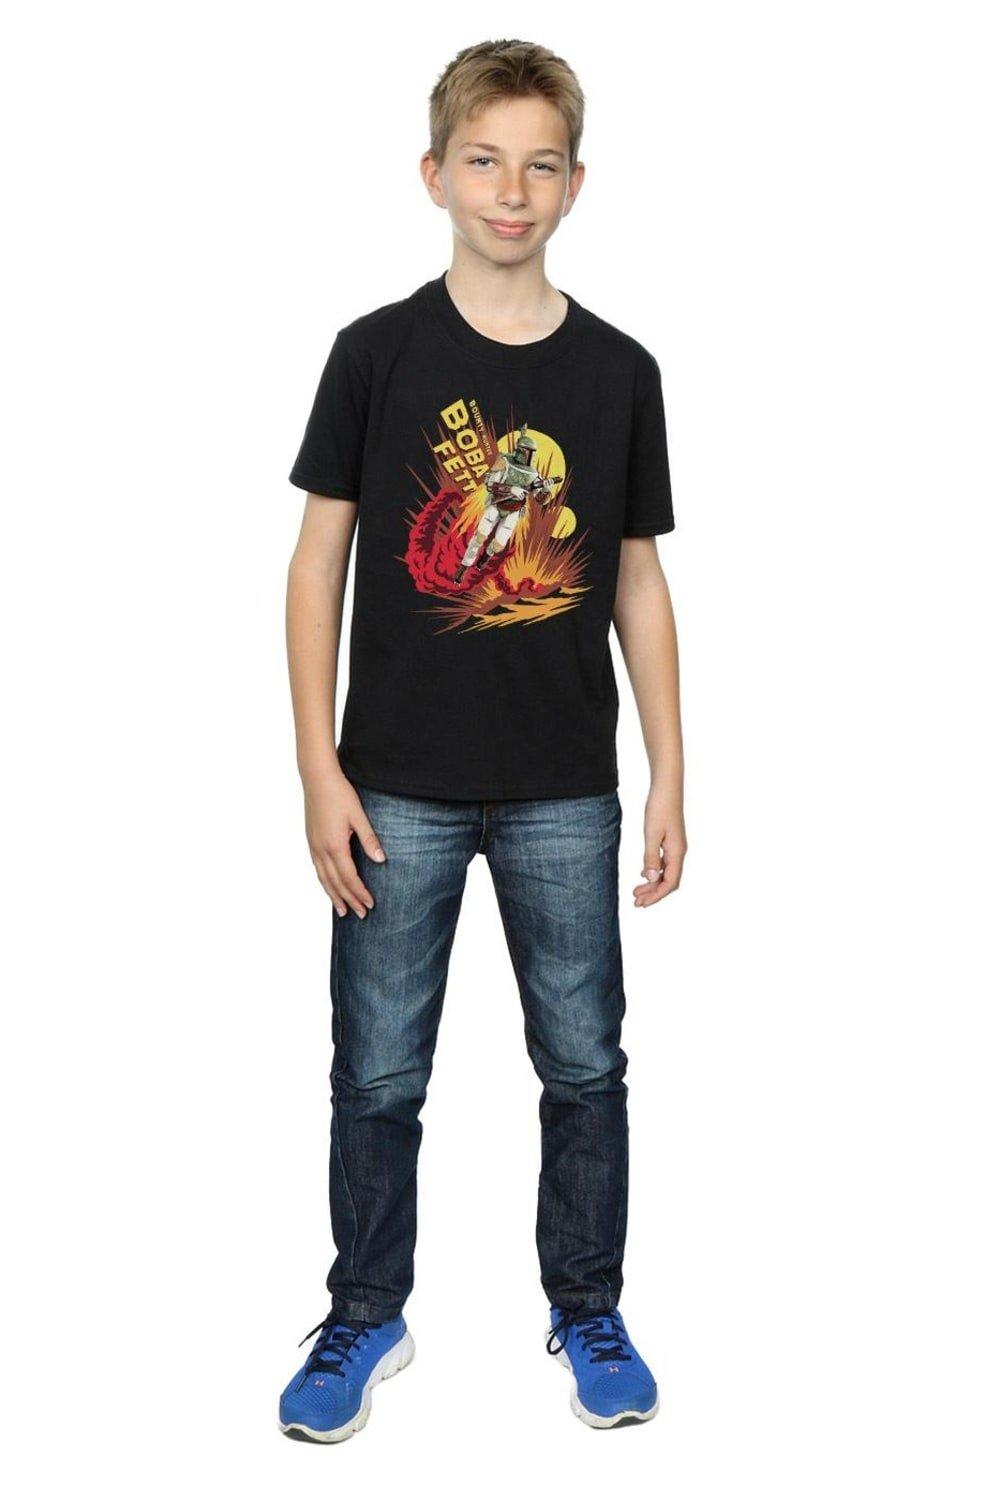 Boba Fett Rocket Powered T-Shirt